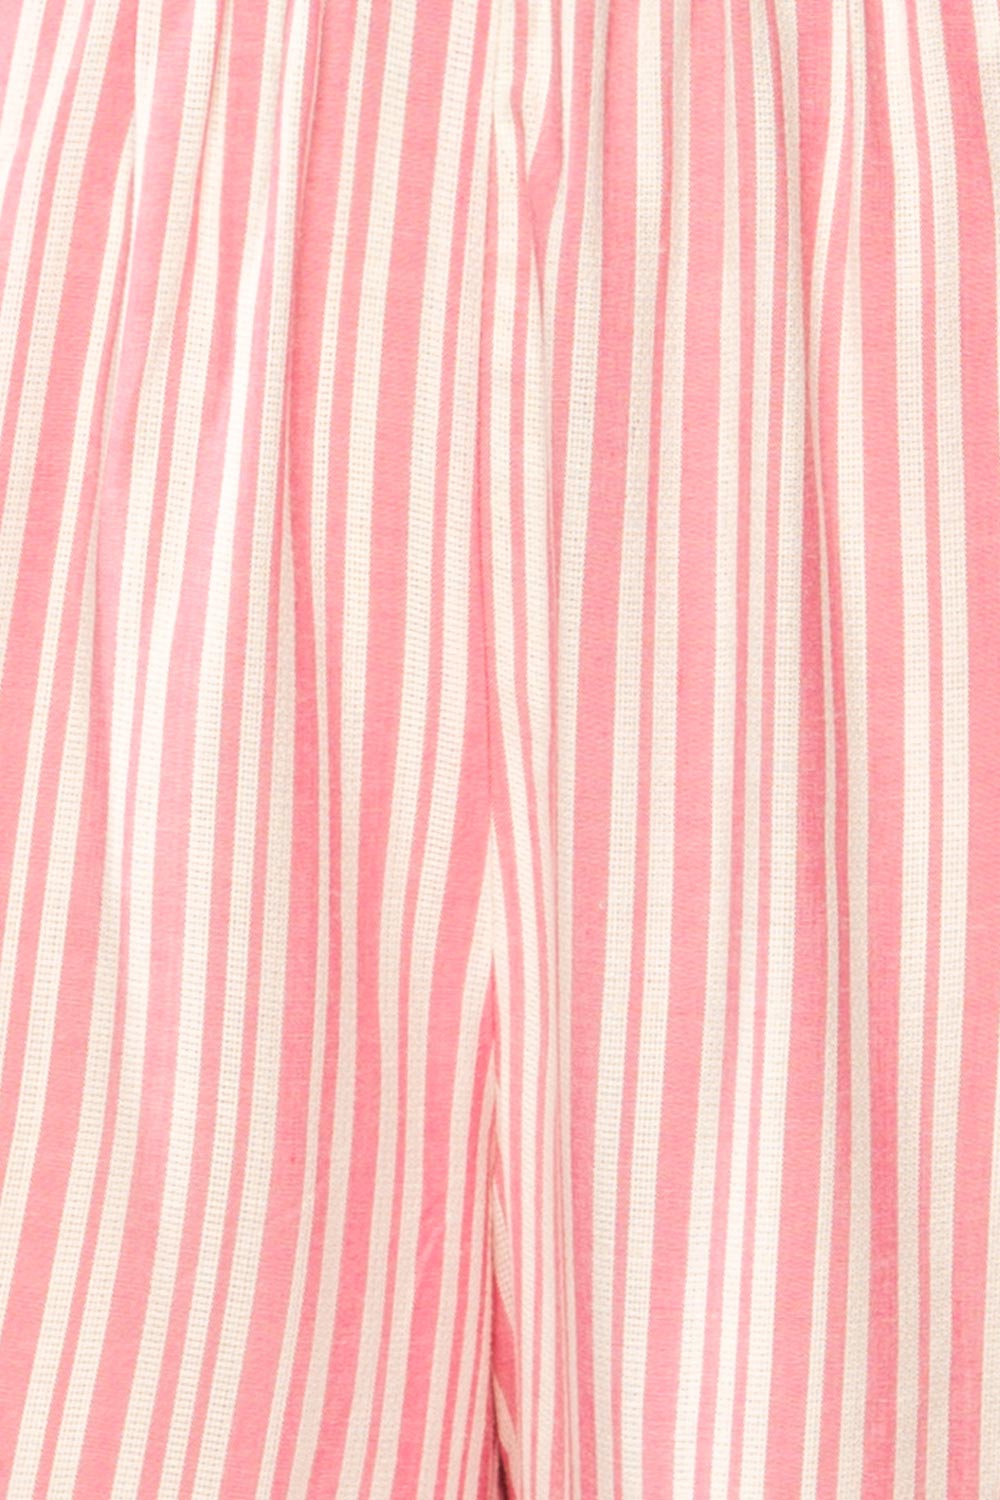 Ventura Pink & White Pinstripe Shorts | La petite garçonne  fabric 